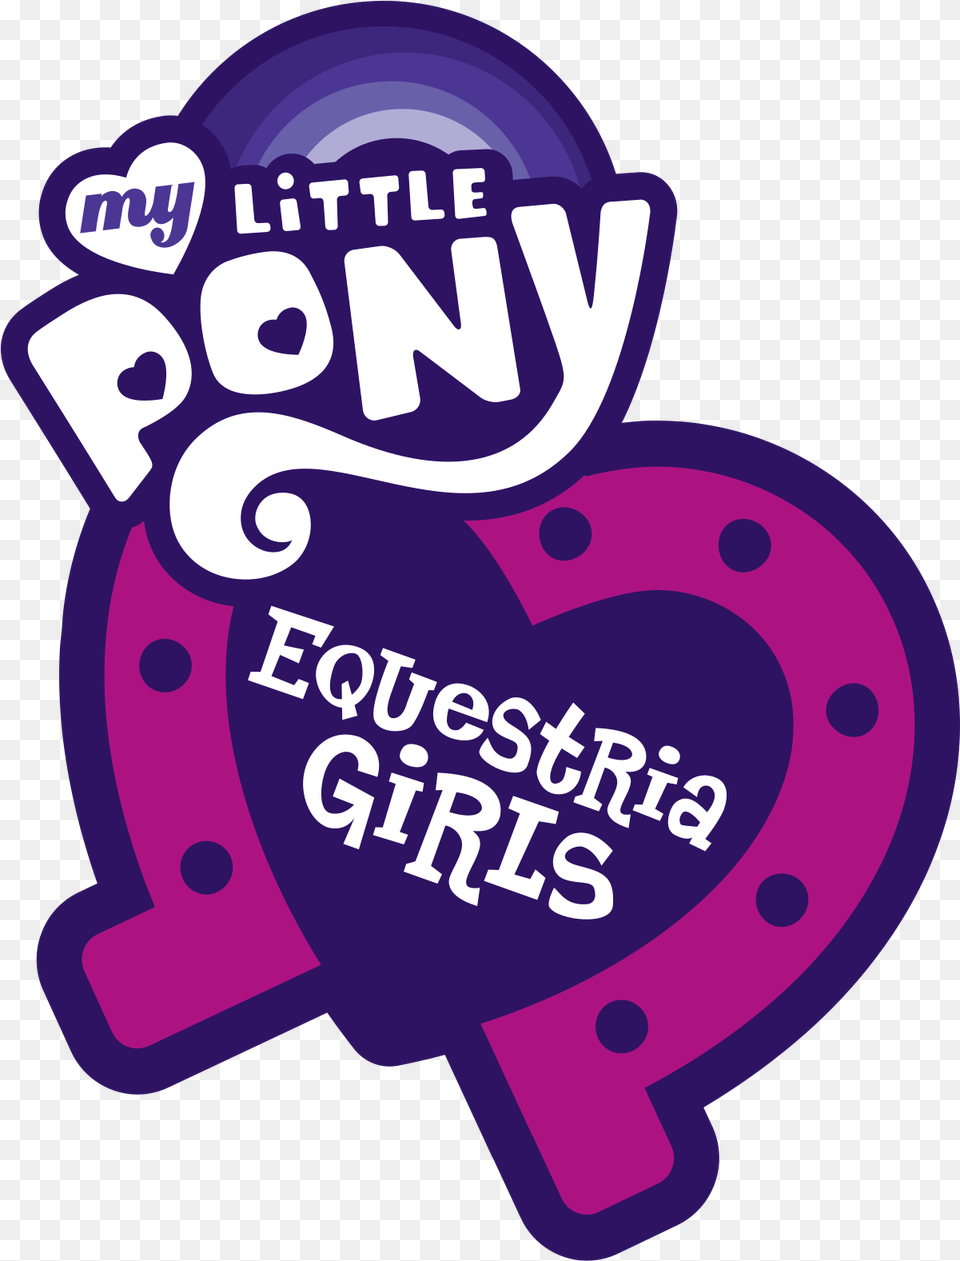 My Little Pony Equestria Girls Wikipedia, Purple, Sticker Free Png Download